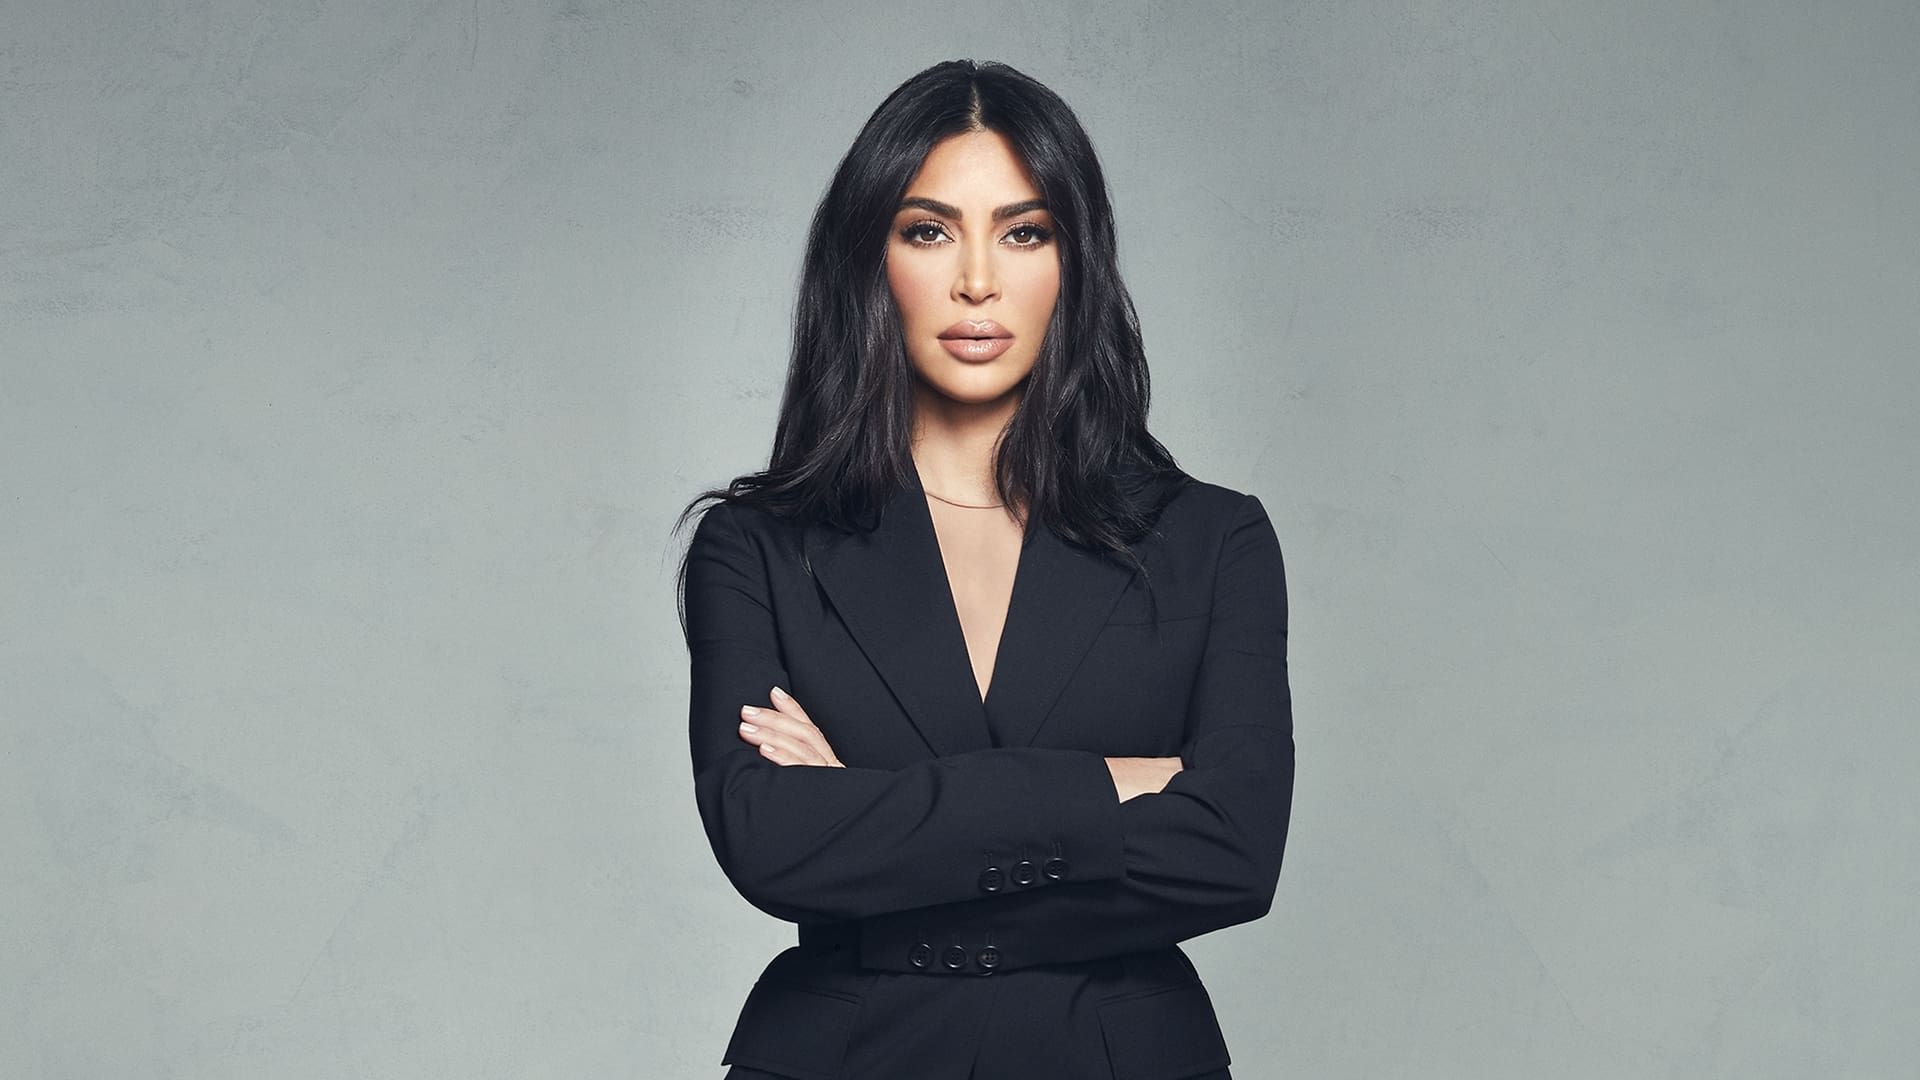 Kim Kardashian West: The Justice Project background